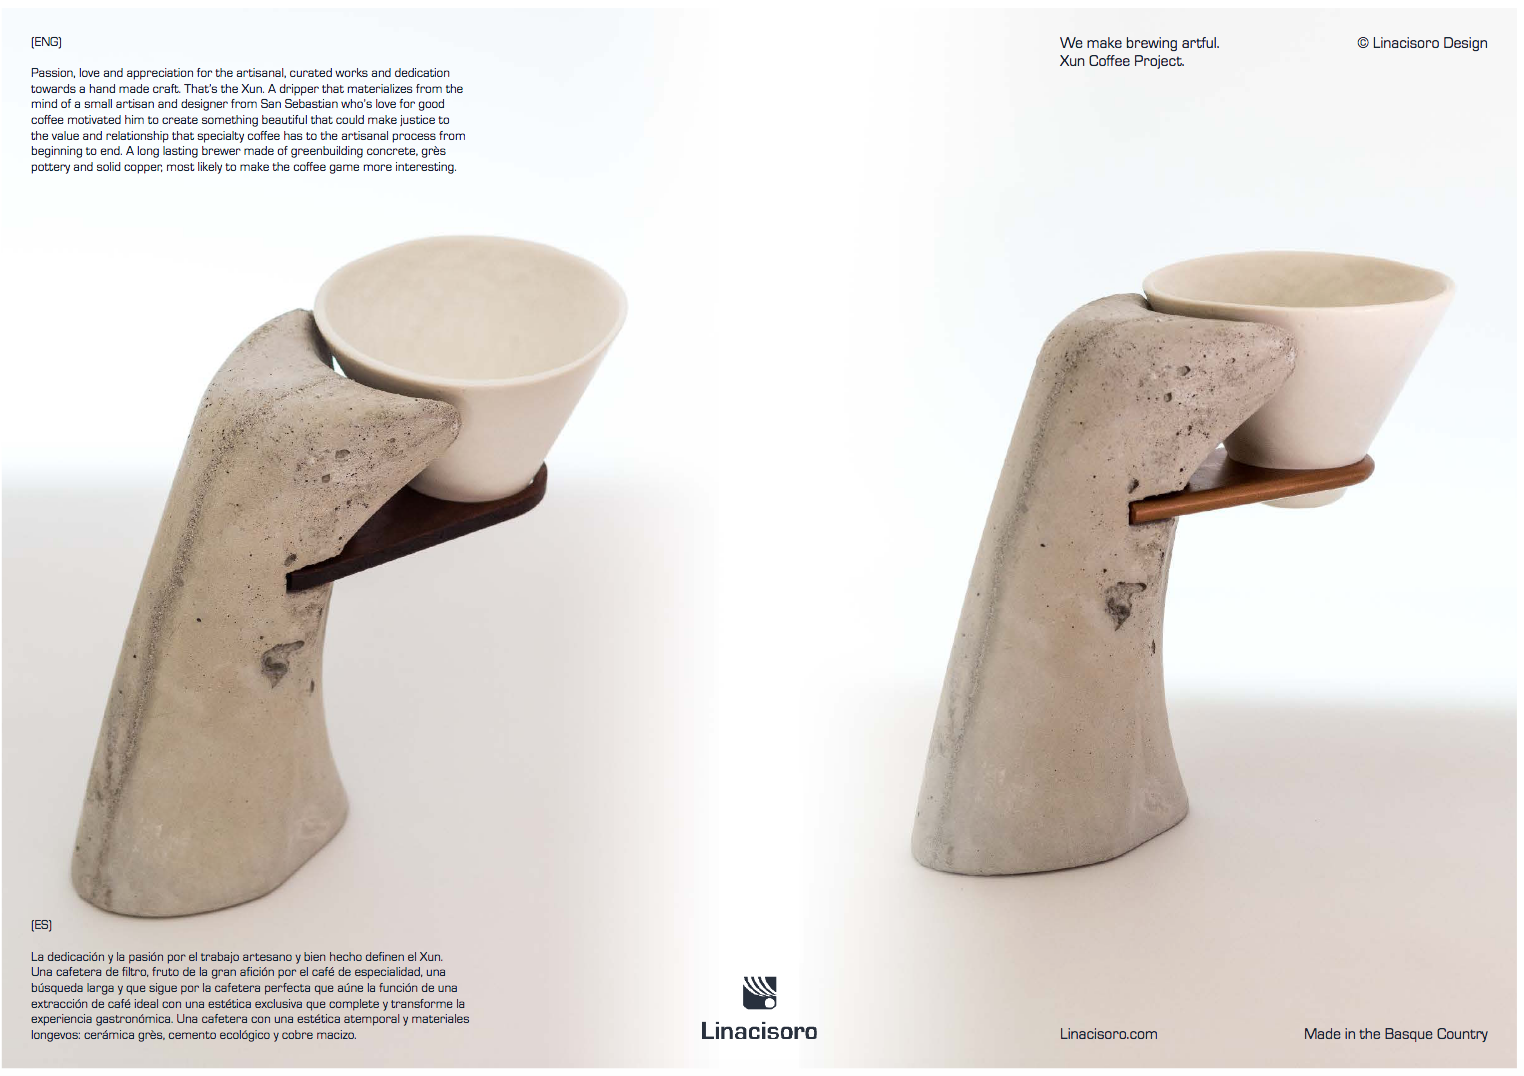 Xun Brutalist Coffee Dripper (copper)  beamalevich architecture gift design gift art gift